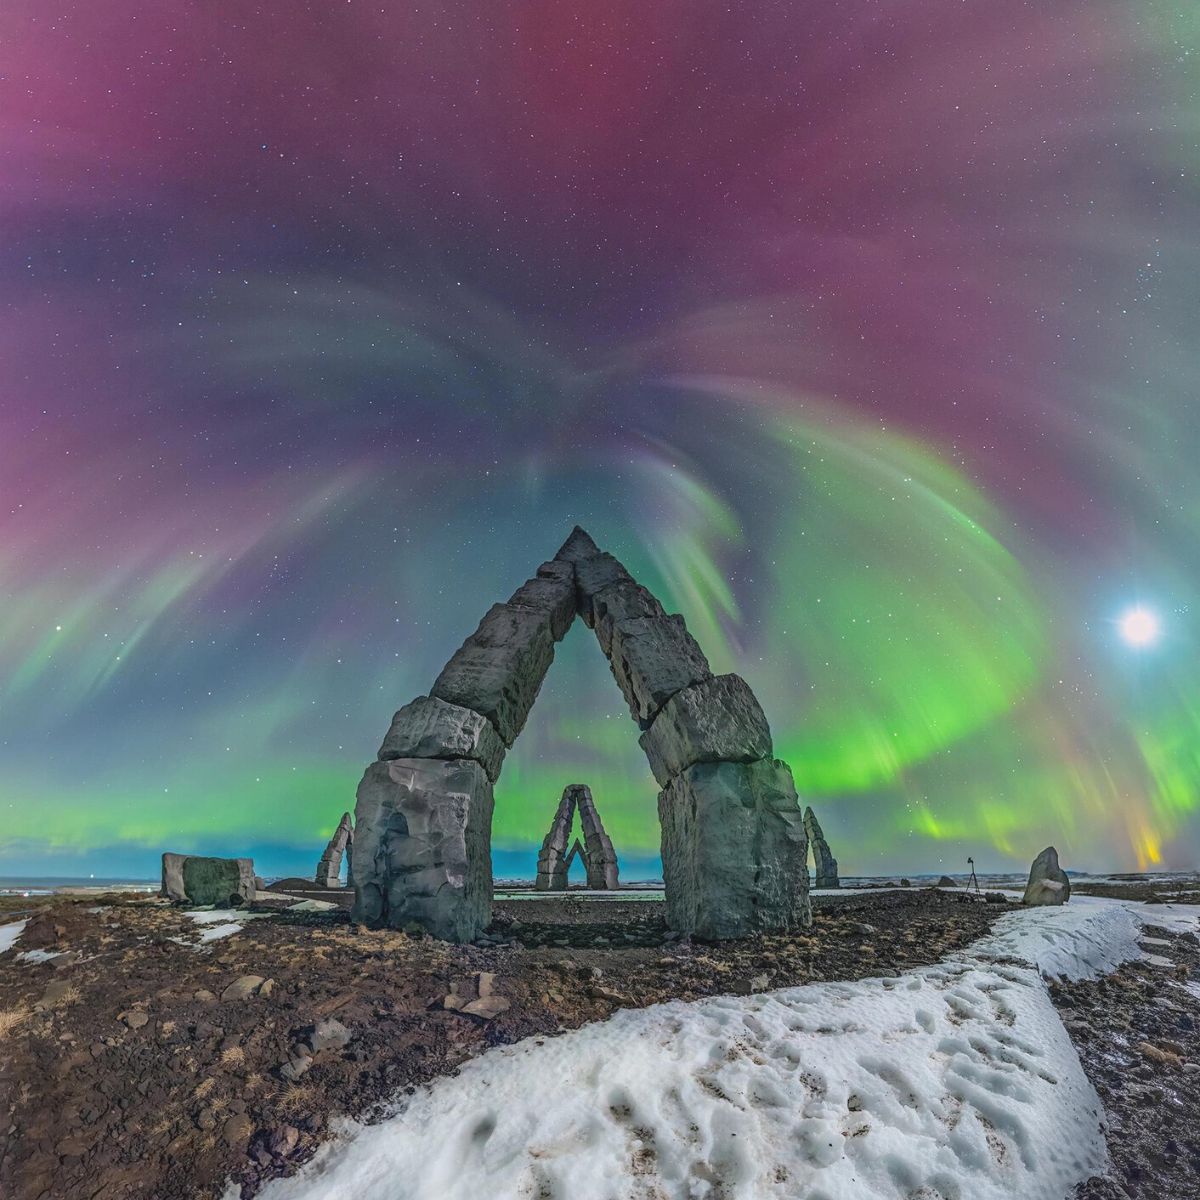 Most impressive photograph of aurora borealis